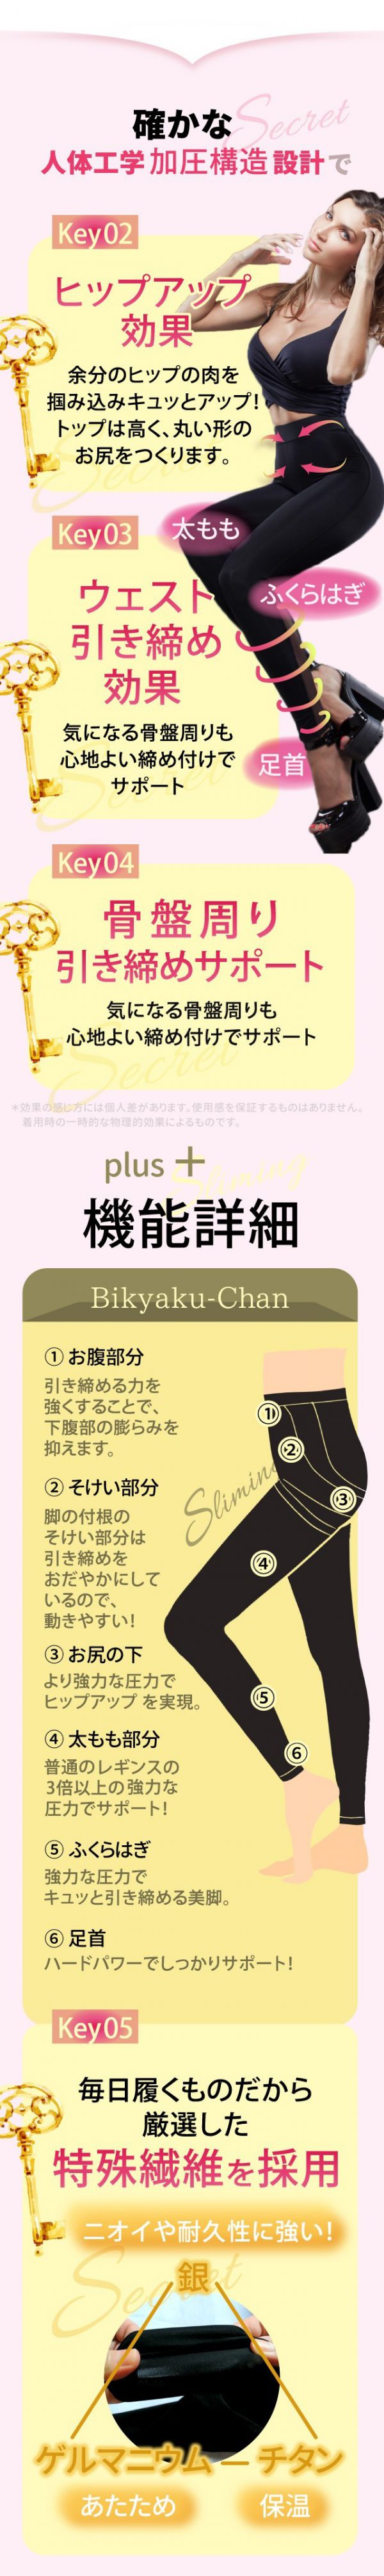 Bikyaku-chan031